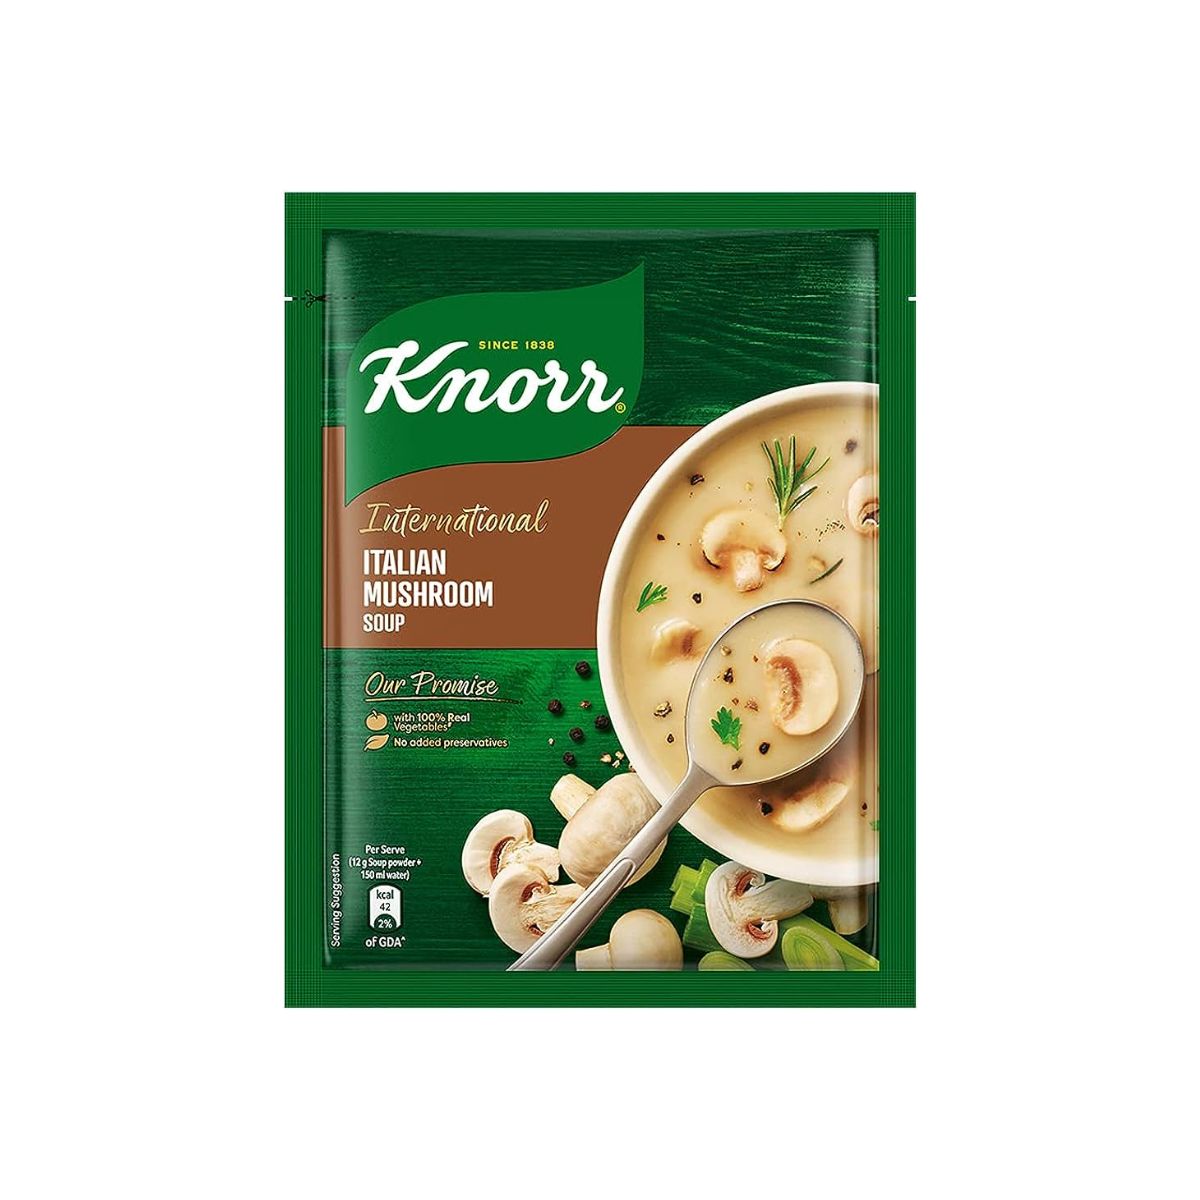 Knorr Italian Mushroom Soup - International - 100% Real Vegetables - 46g